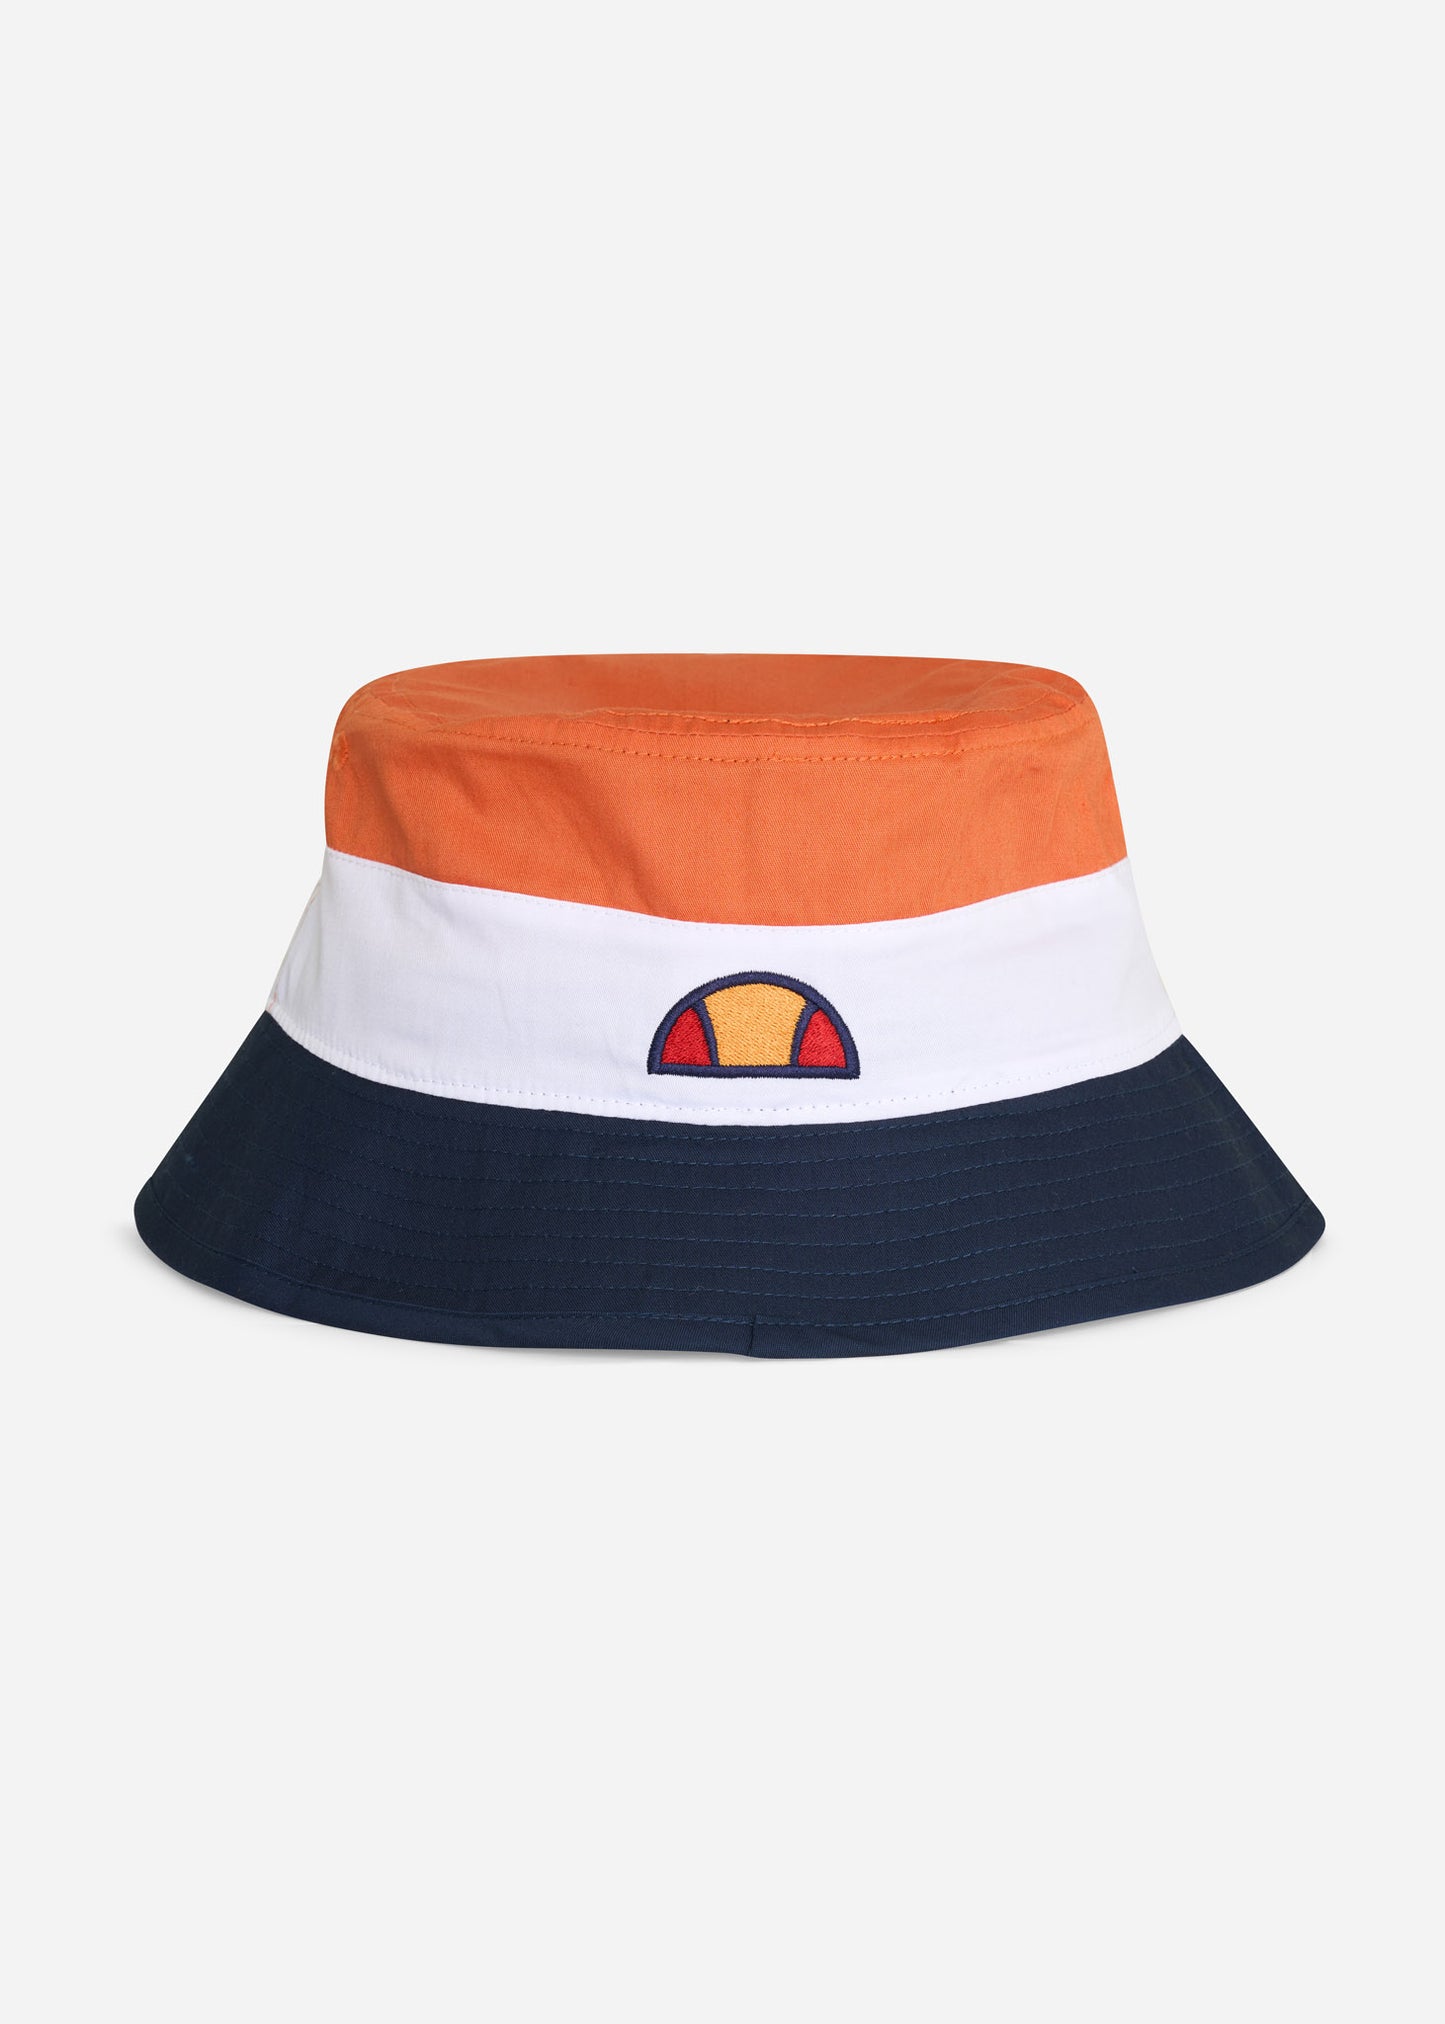 Onzio bucket hat - orange